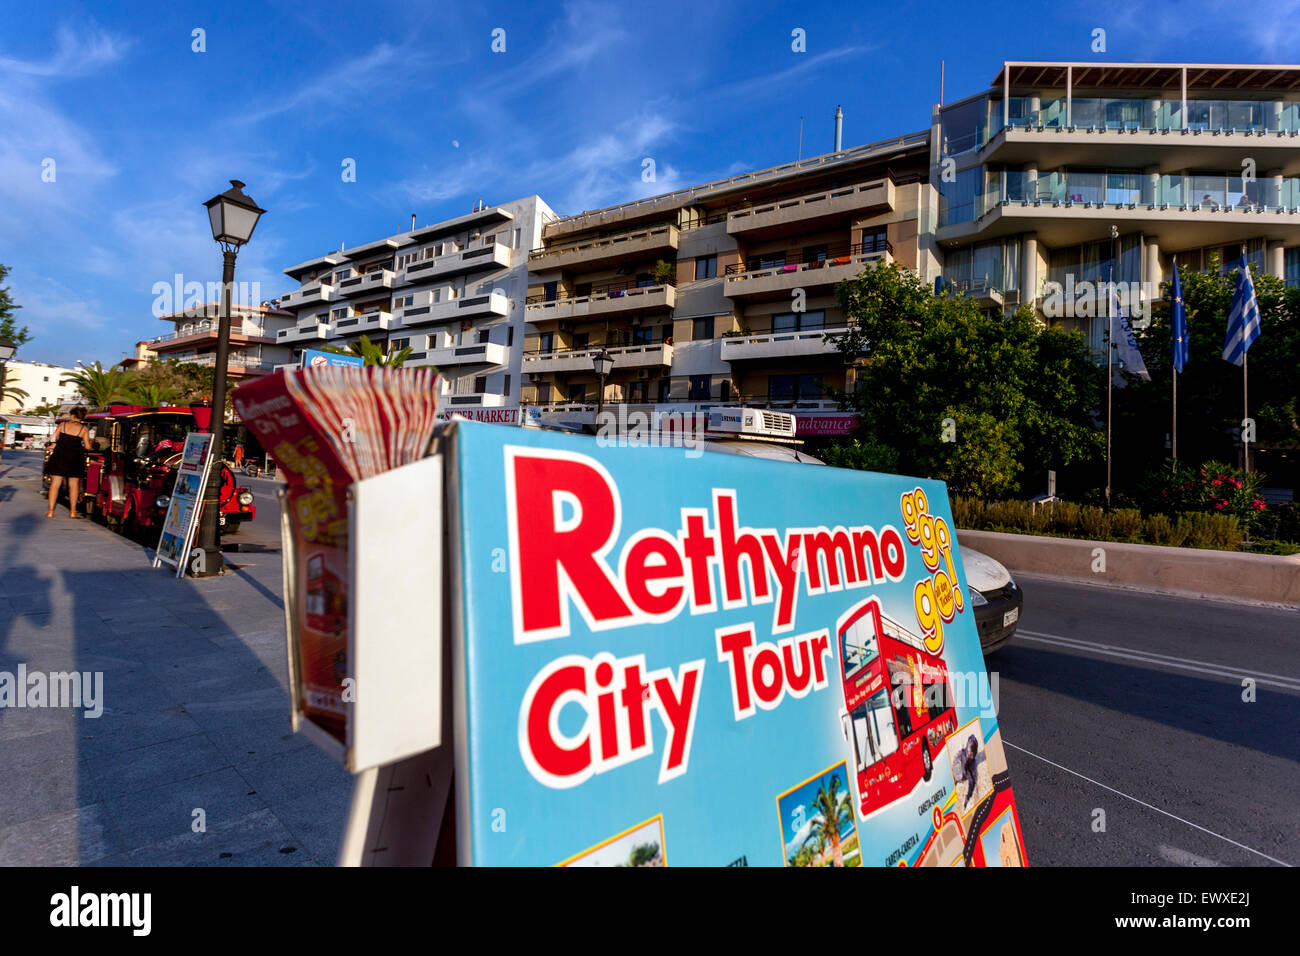 Rethymno city tour signboard, Crete, Greece Stock Photo